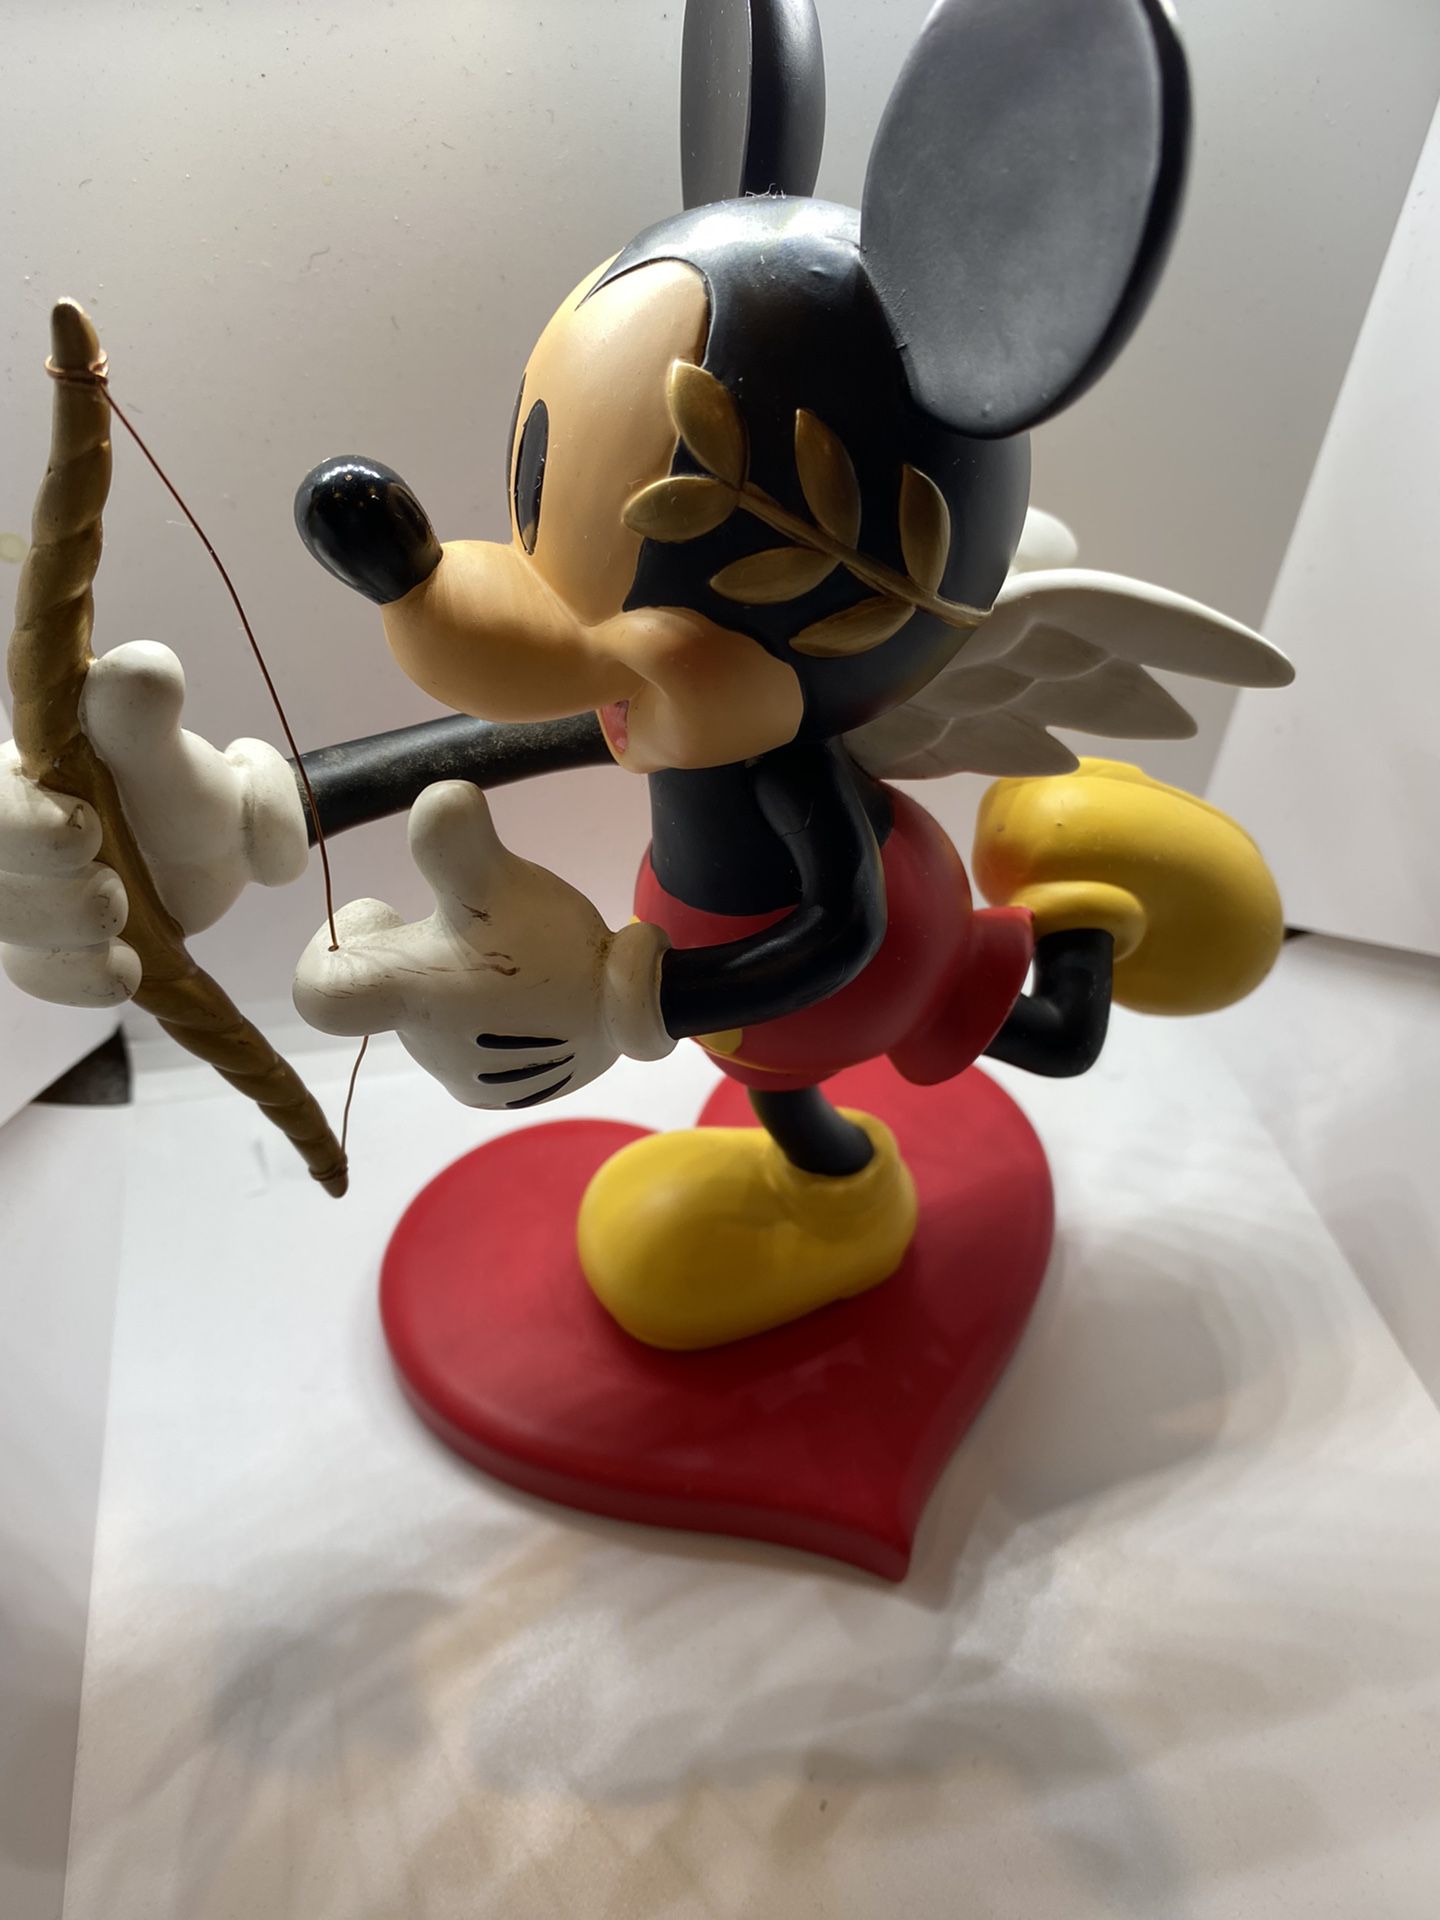 Mickey Mouse Cupid In Love Figurine Disney Store Exclusive Rare Figurine 7x7 1/2